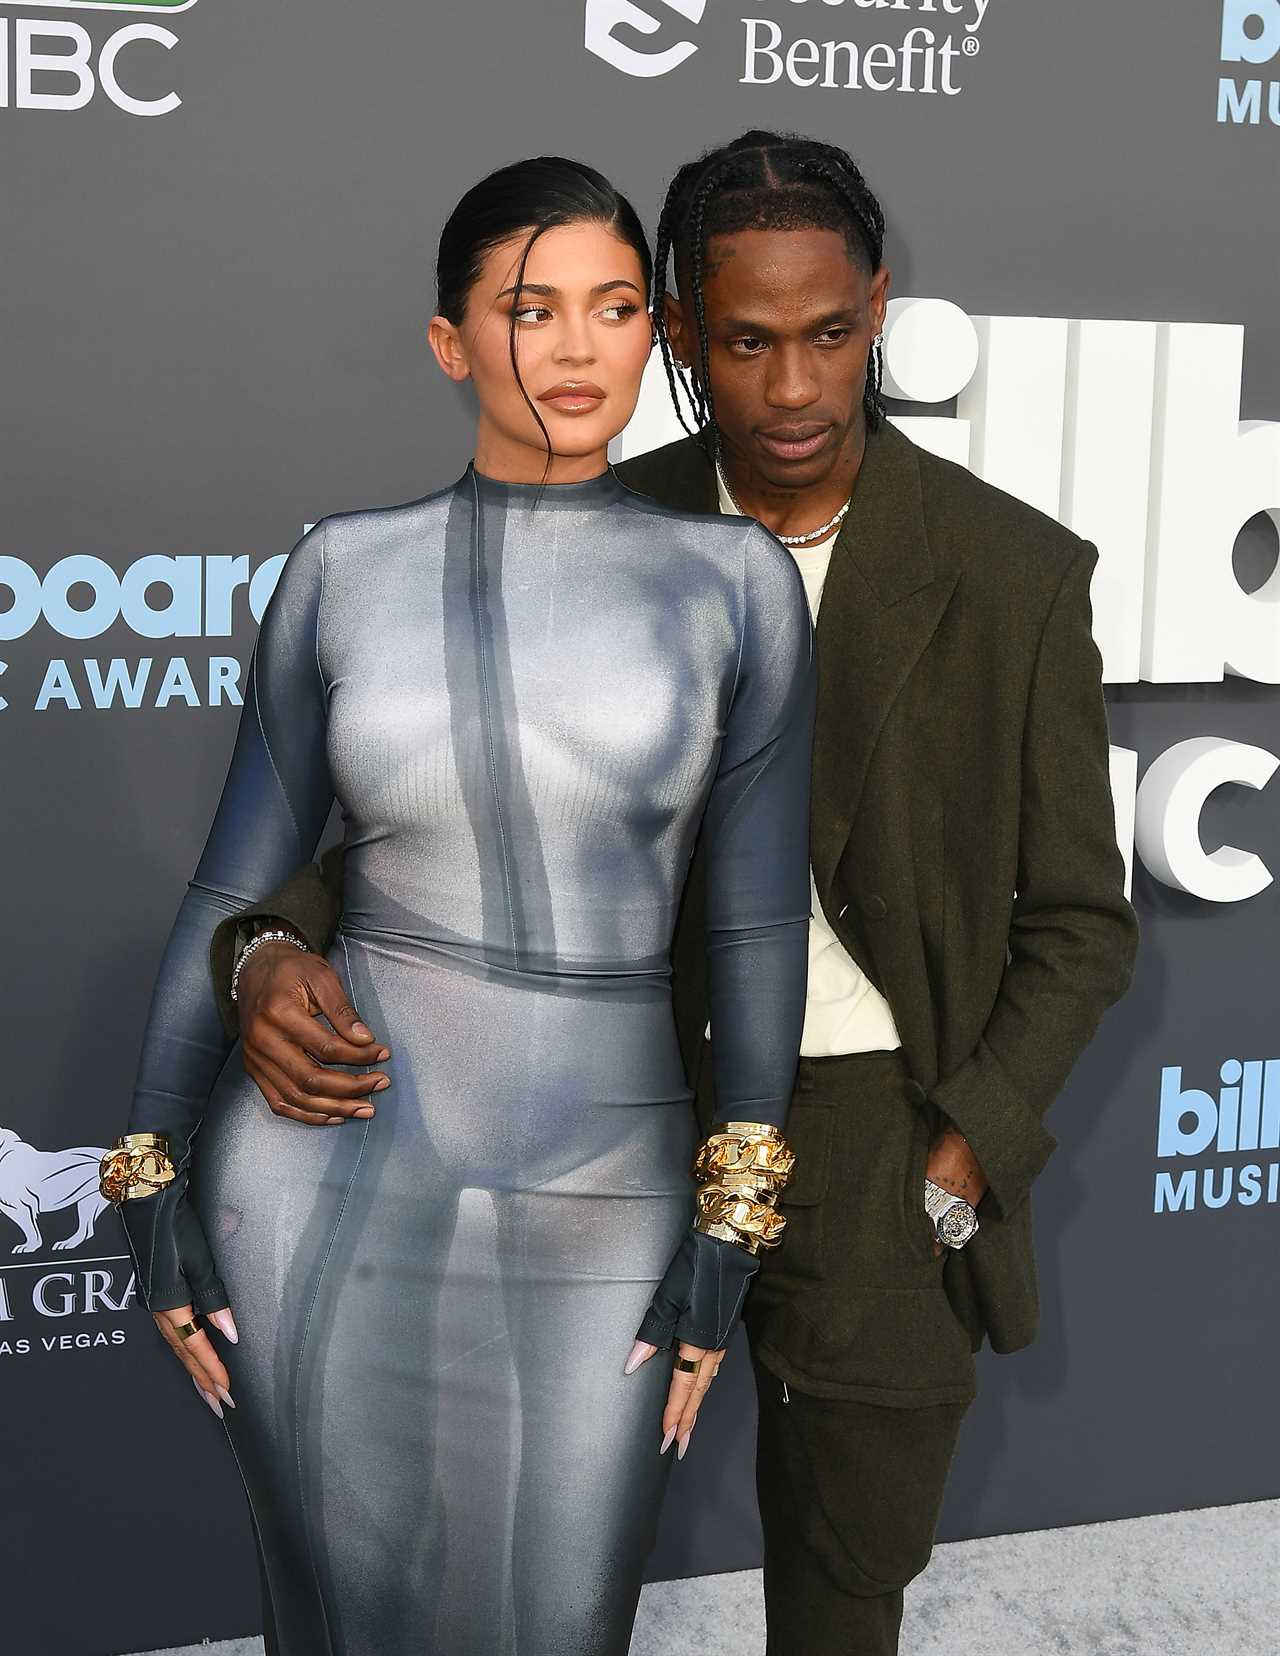 Kardashian fans predict Kylie Jenner will date A-list rapper next after latest split from baby daddy Travis Scott